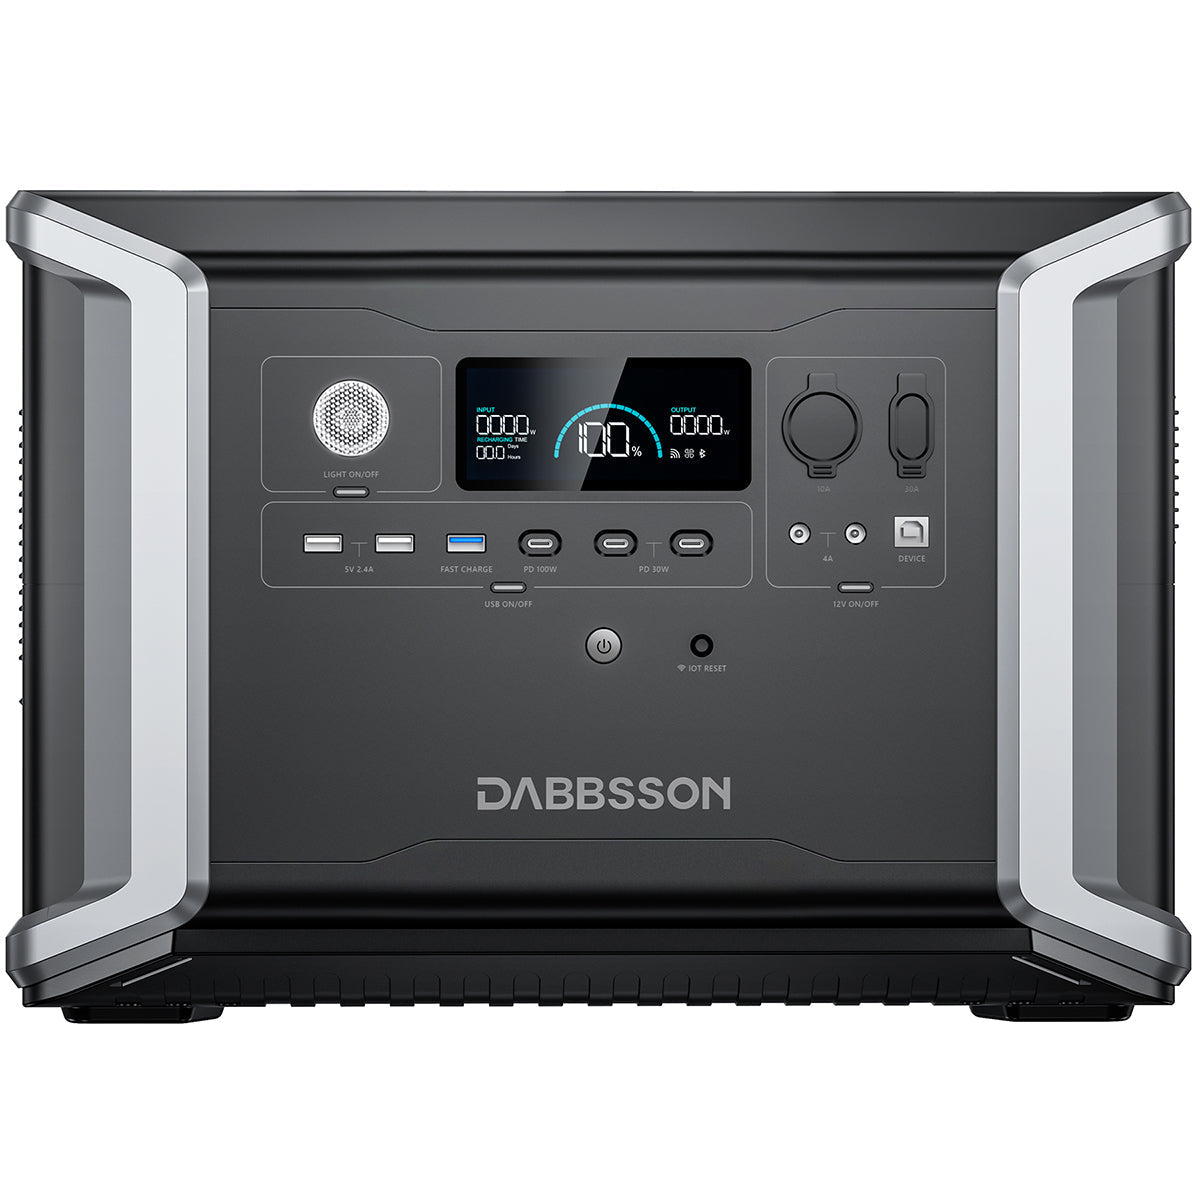 Dabbsson DBS2300 Plus Solar Generator ポータブル電源 セット- 2330Wh | 2200W | 420W